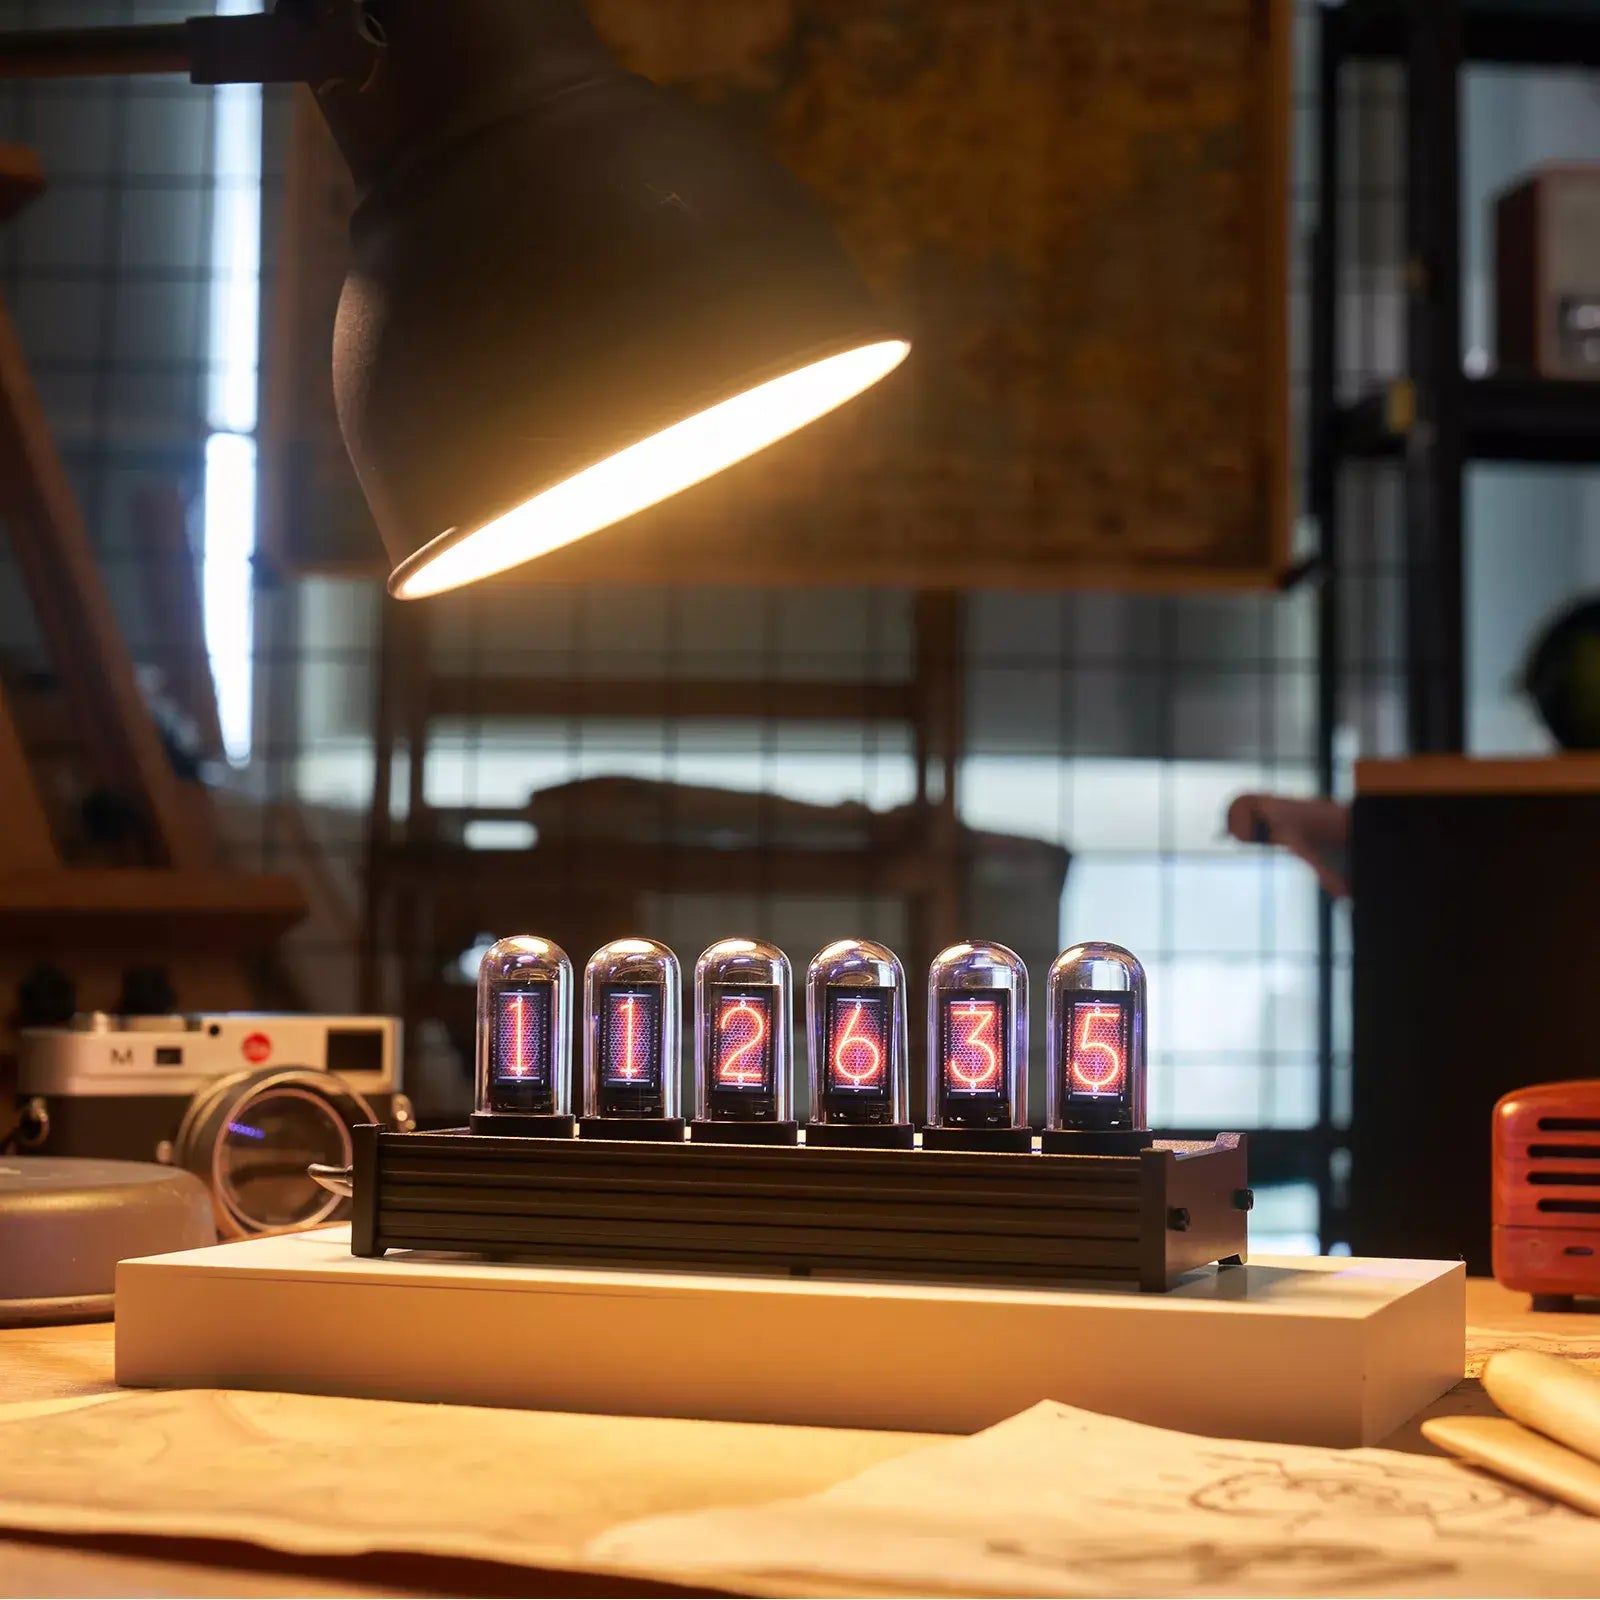 xCool Elekstube Nixie Tube Clock in Cyberpunk & Vintage Decor with Mood Lighting